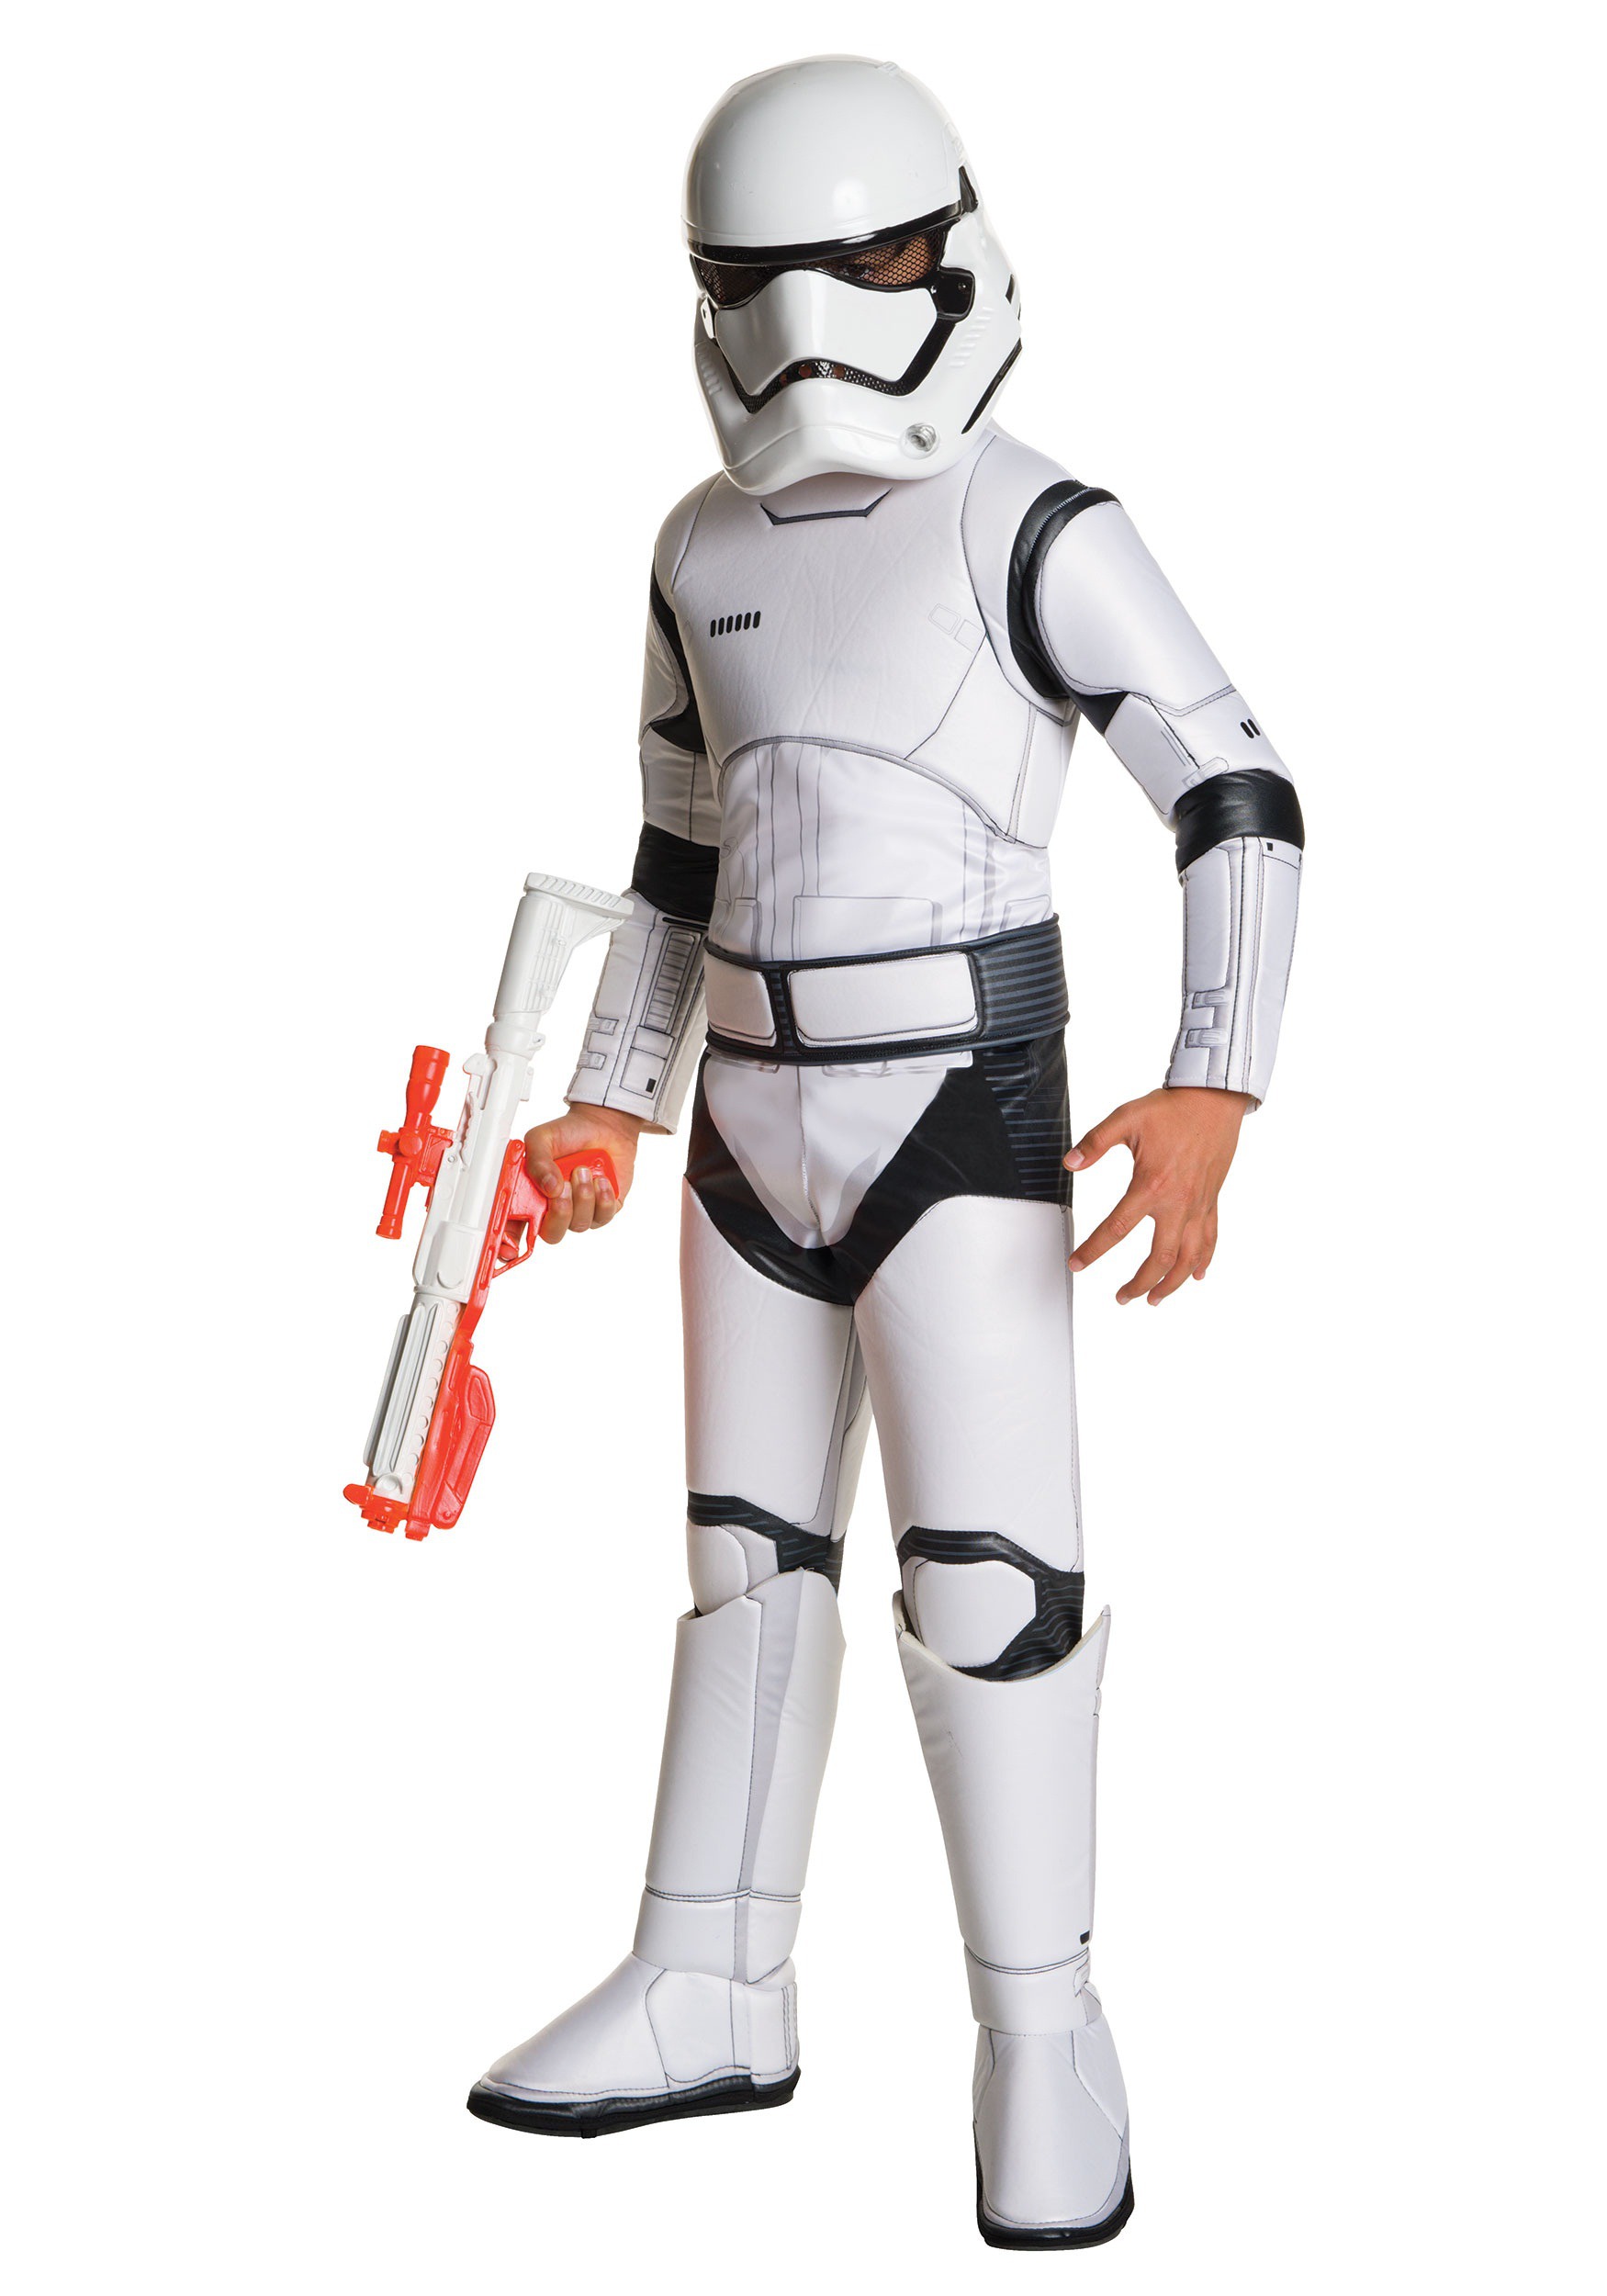 Child Super Deluxe Stormtrooper Costume from Star Wars Episode 7